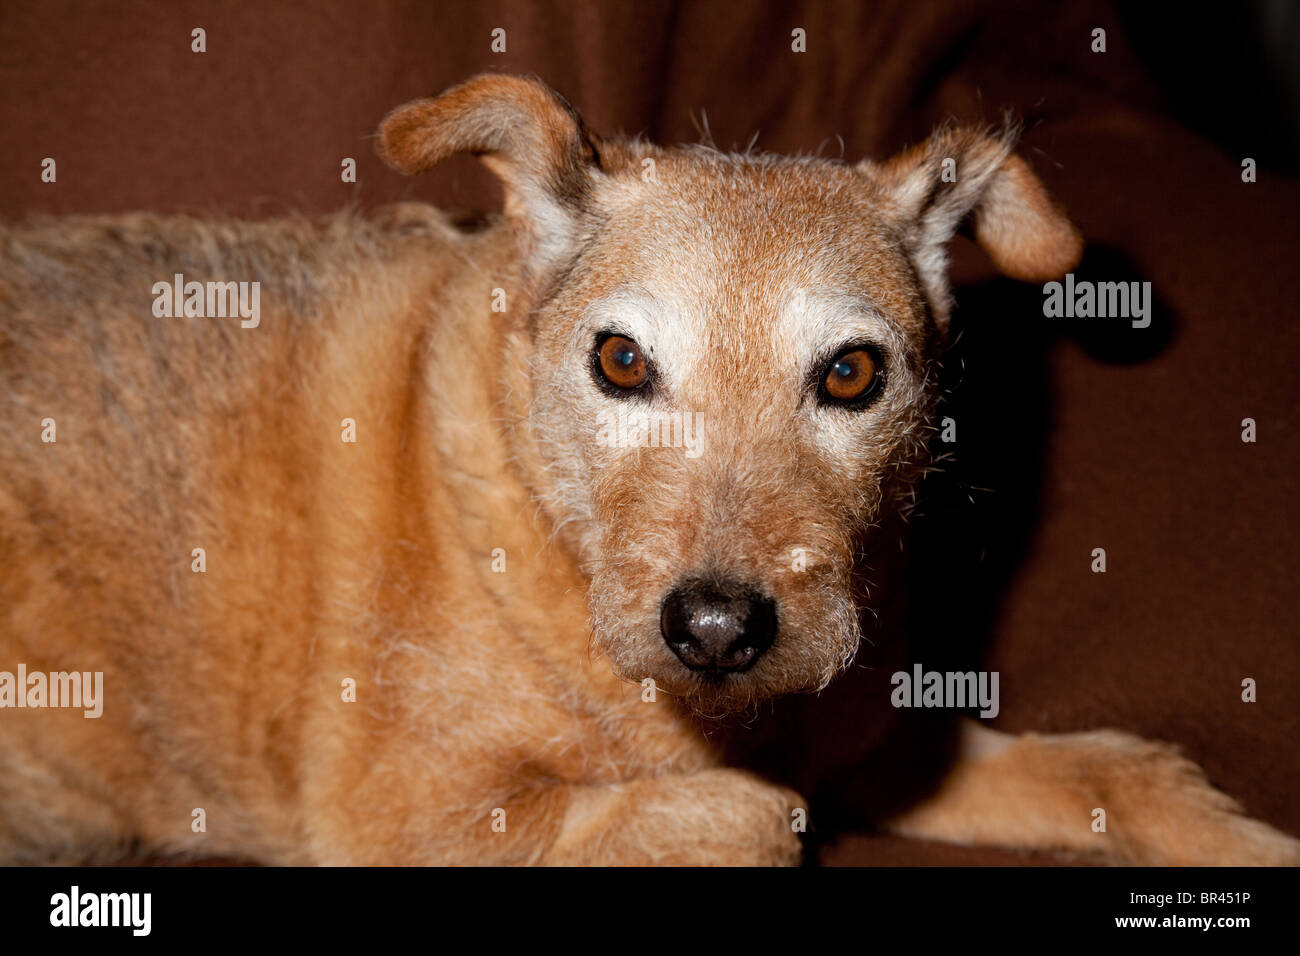 Brown mongrel dog lay down on light brown cloth Stock Photo